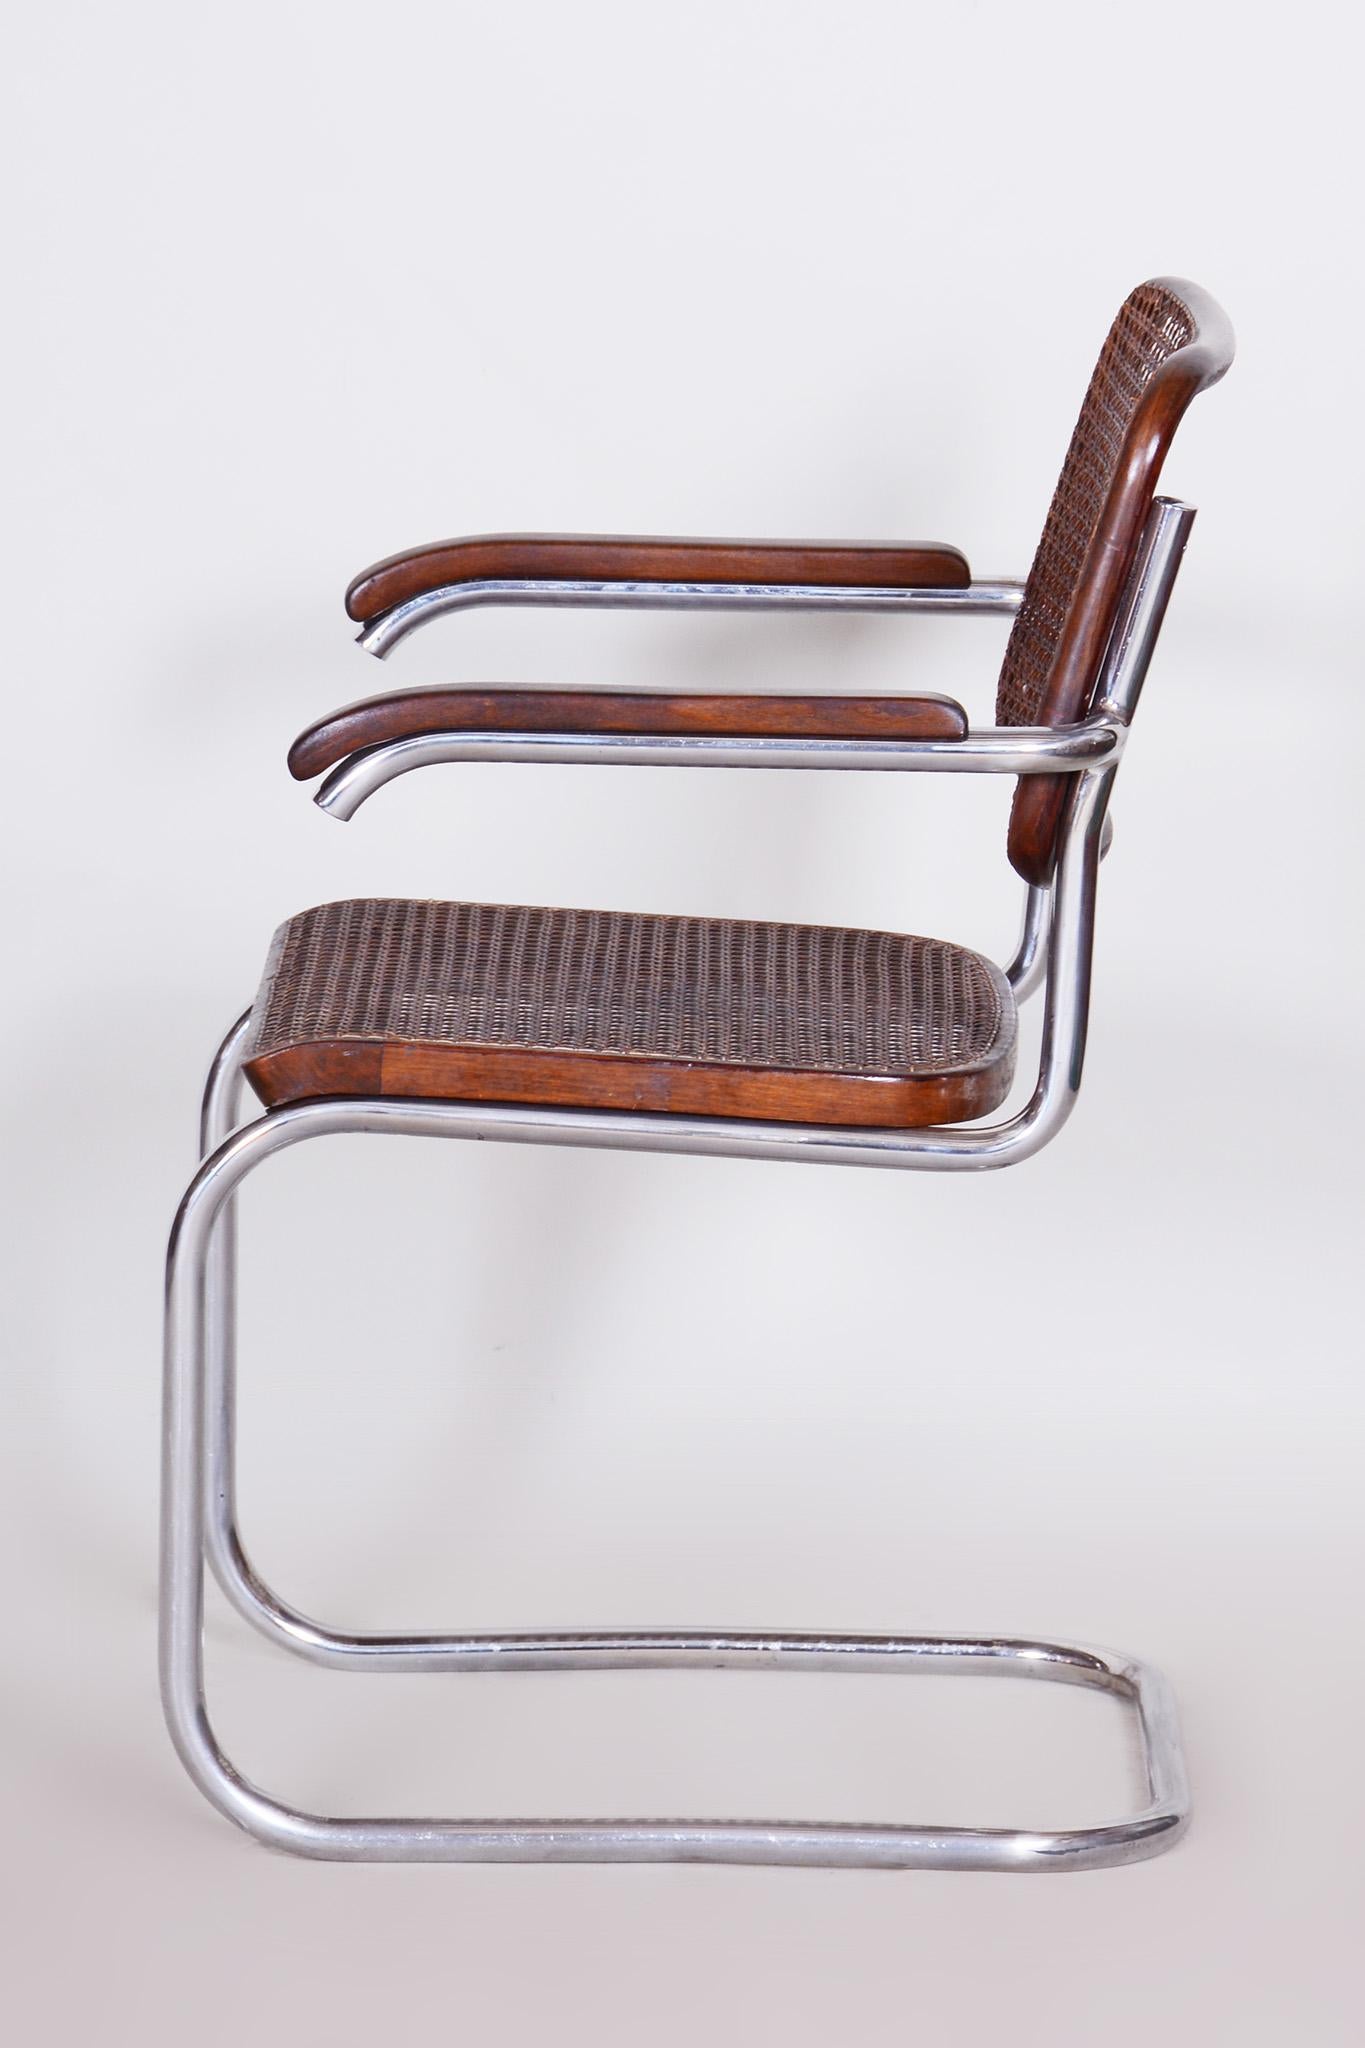 Rattan Restored Bauhaus Armchair, Marcel Breuer, Thonet, Beech, Chrome, Germany, 1930s For Sale